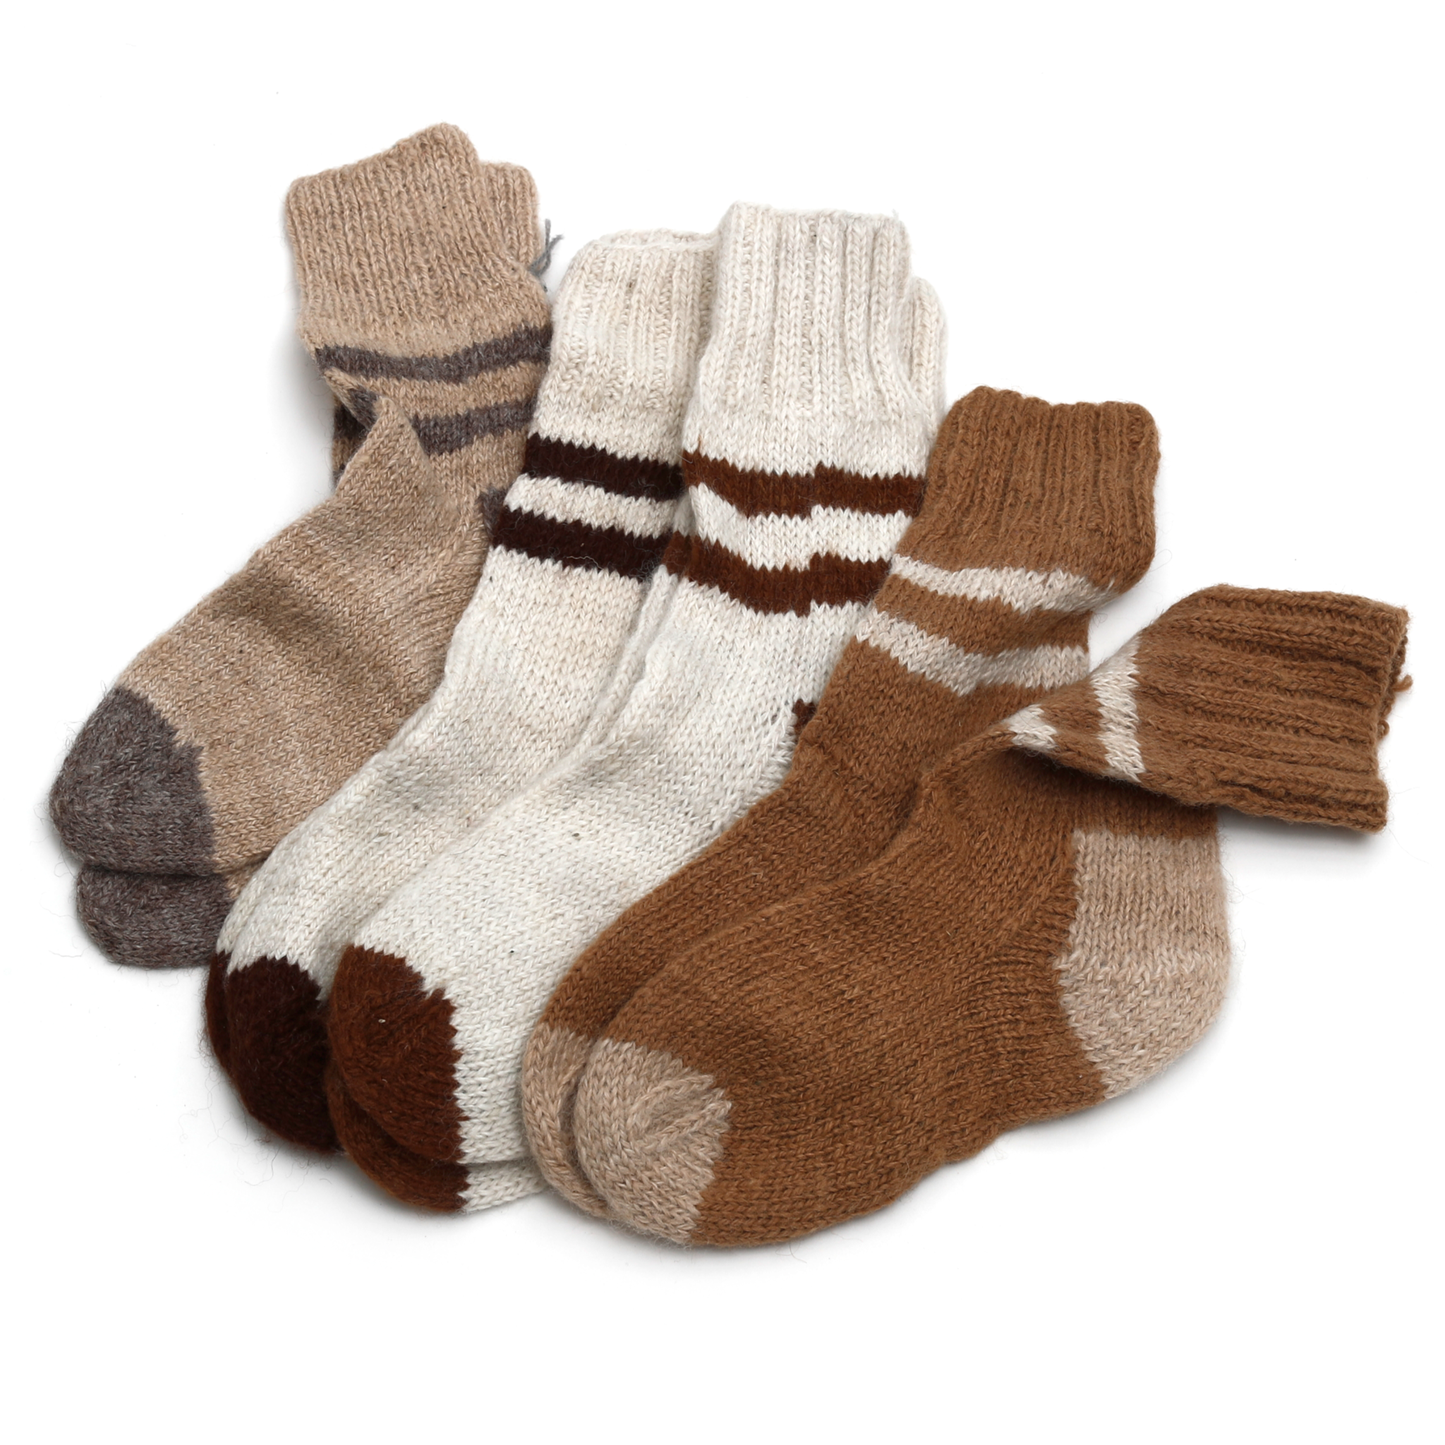 Intiearth baby alpaca handknit socks